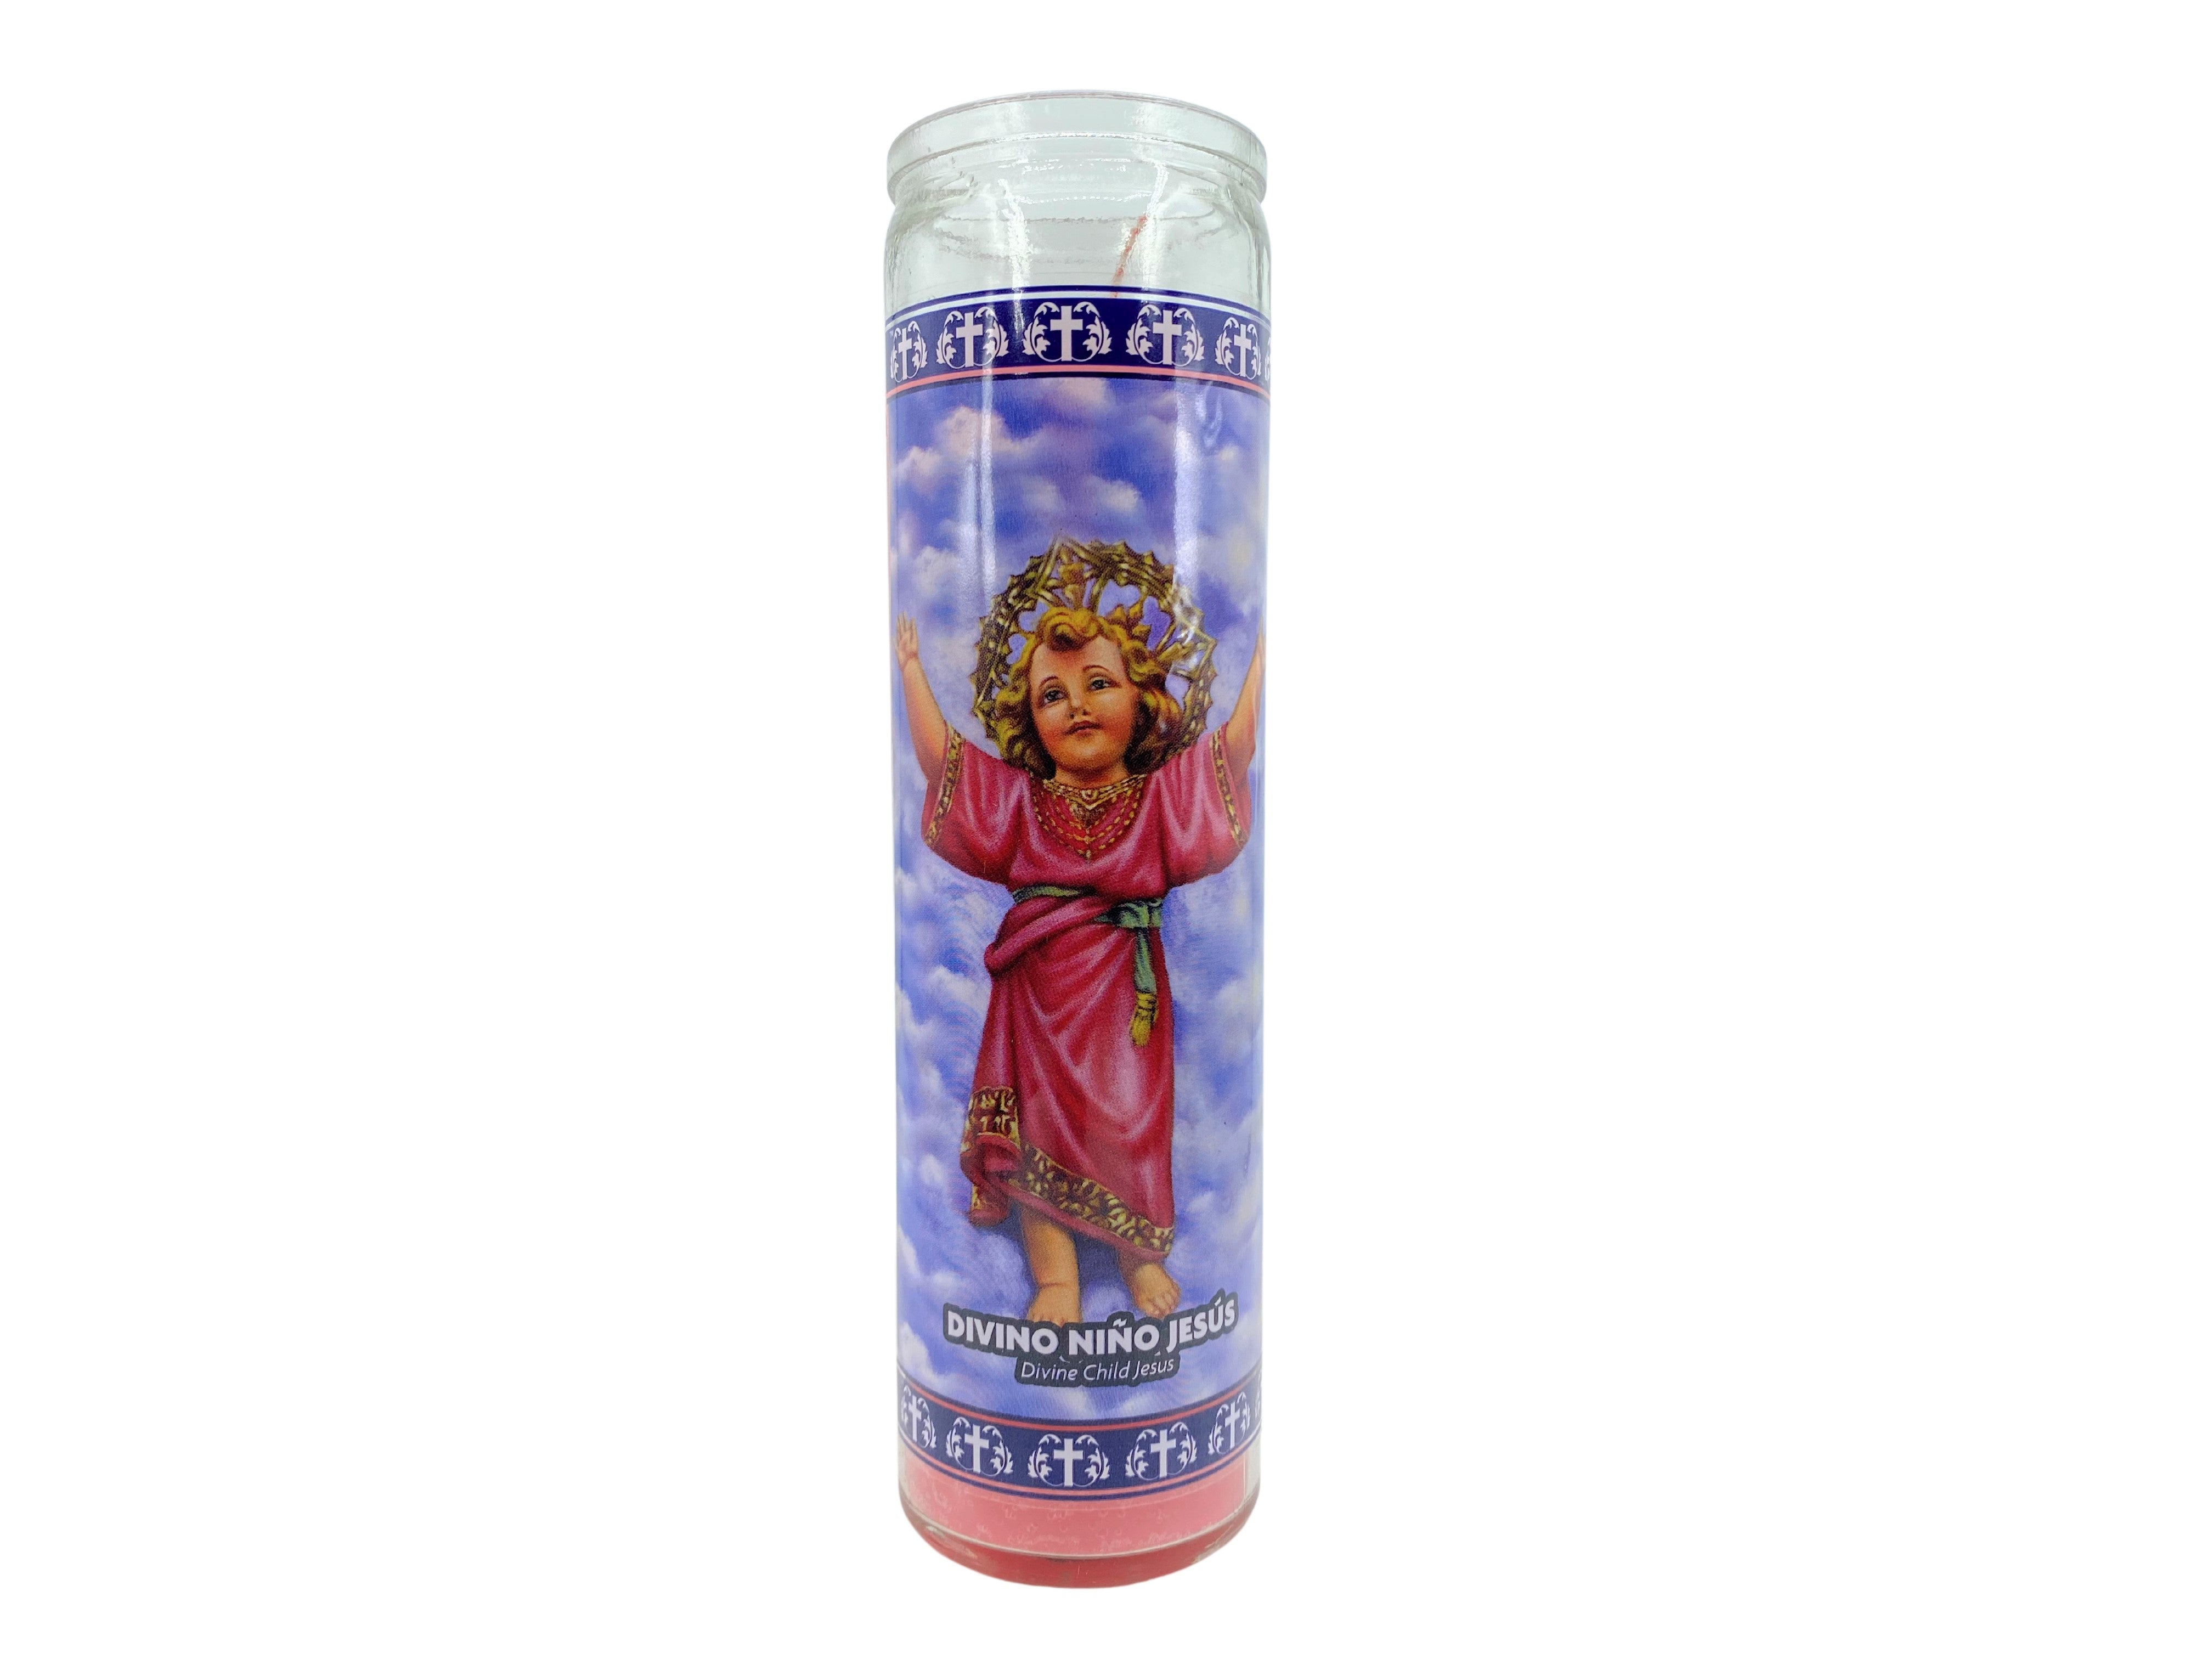 Candles of The Divine Child Jesus / Velas Del Divino Nino Jesus